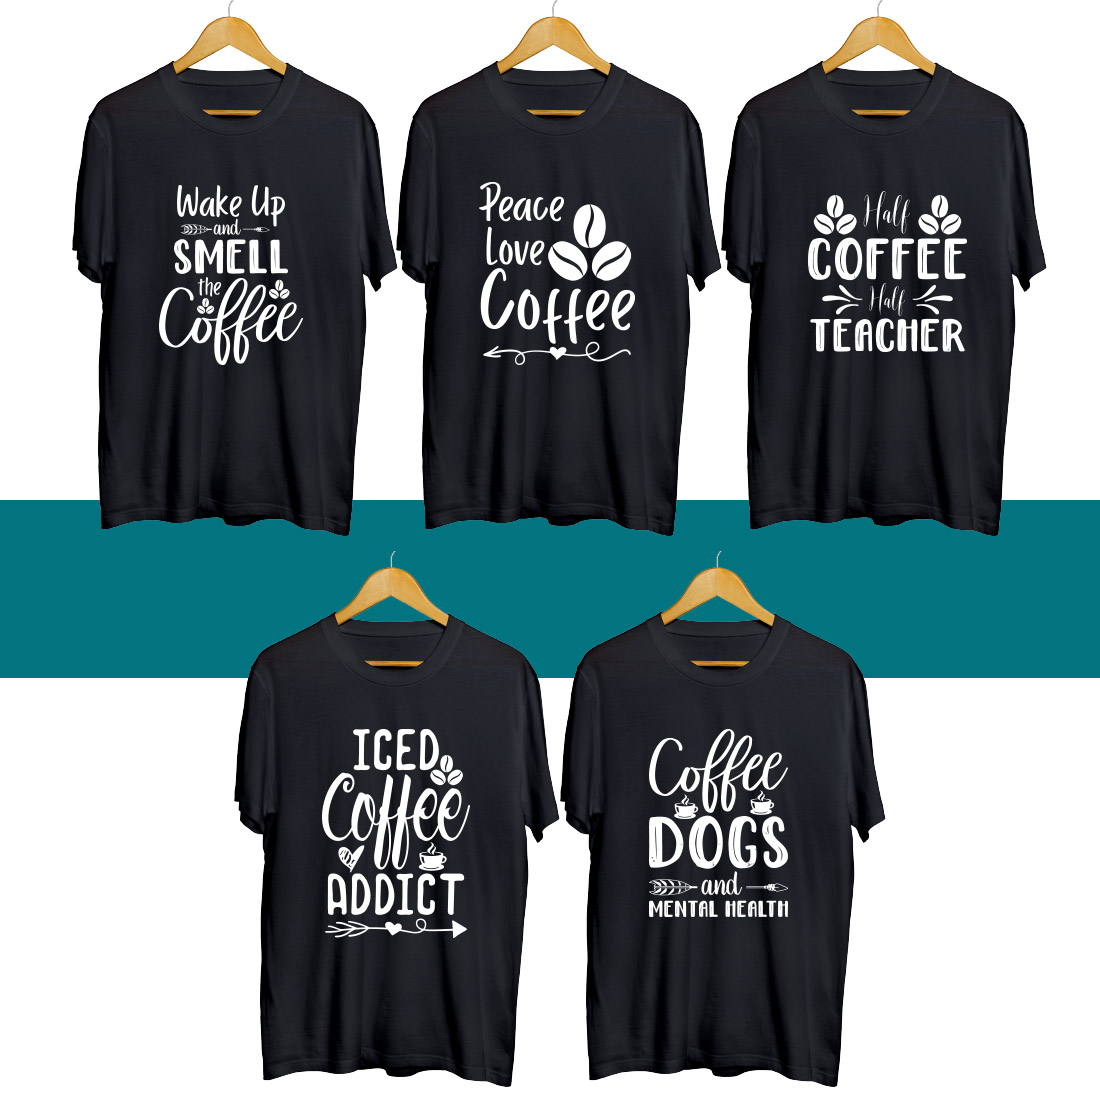 Coffee SVG T Shirt Designs Bundle cover image.